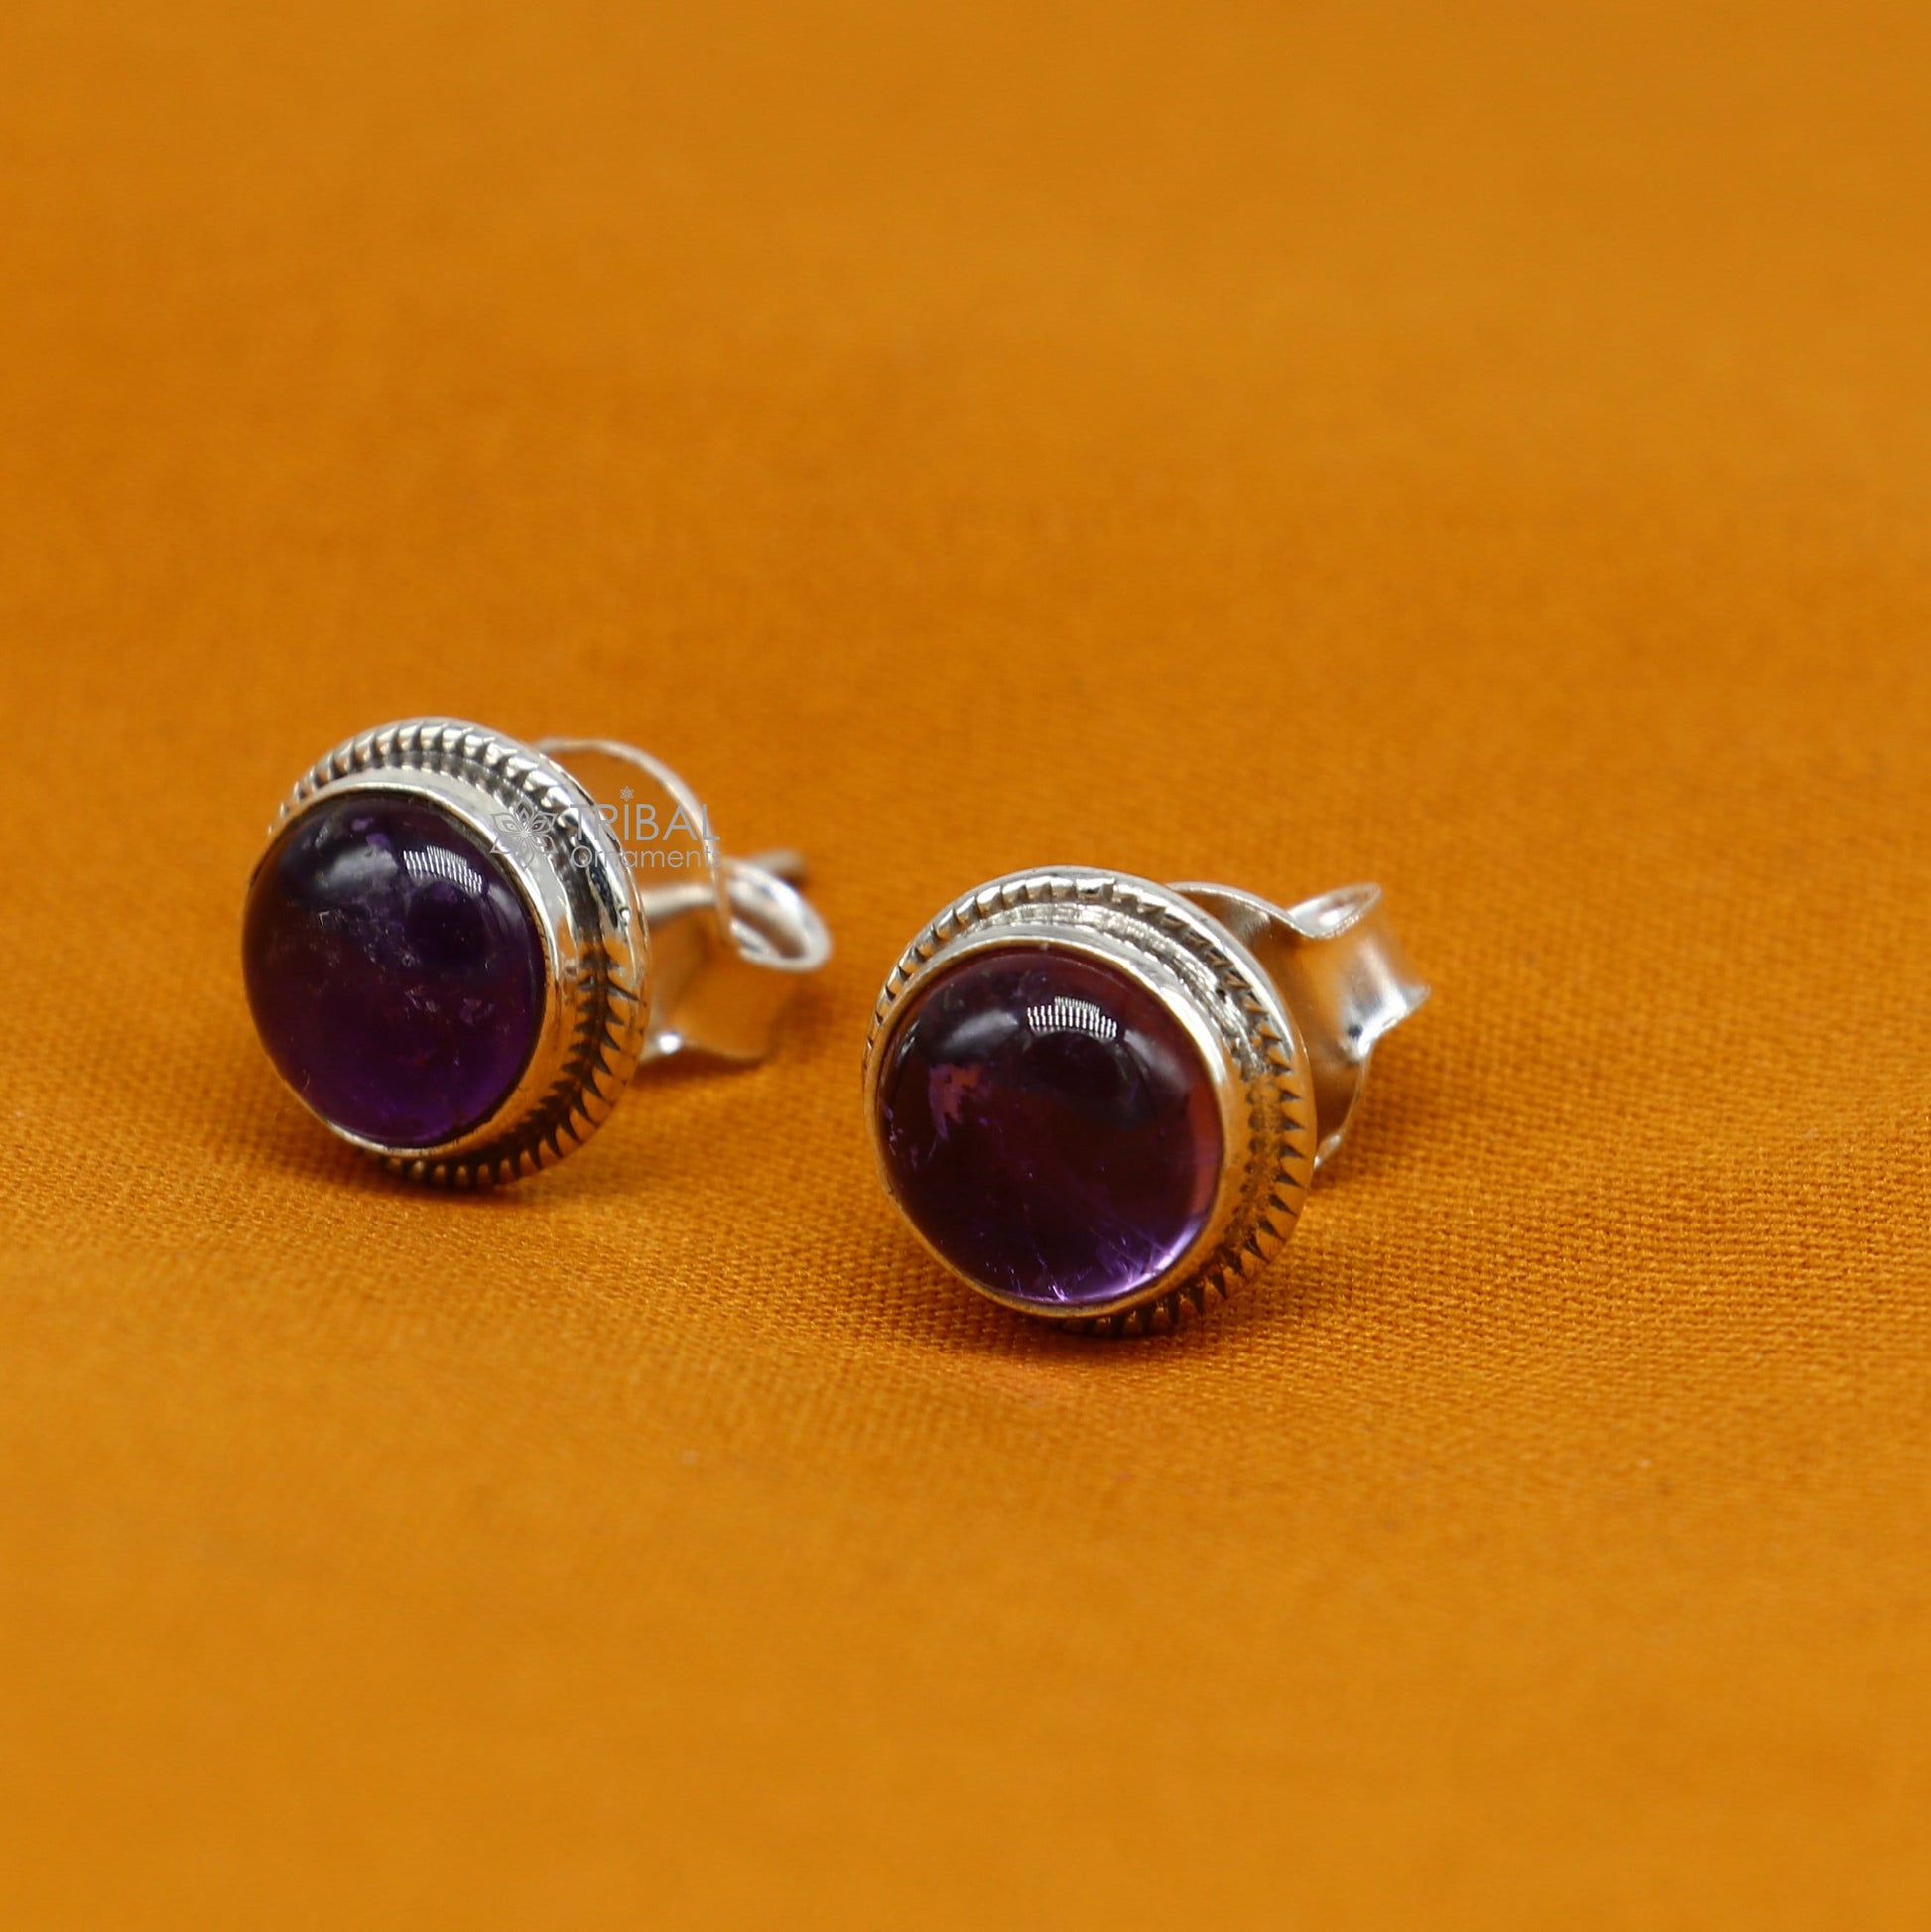 11MM round 925 sterling silver fabulous amethyst stone stud earrings, best unisex jewelry fancy earrings daily use jewelry collection s1220 - TRIBAL ORNAMENTS